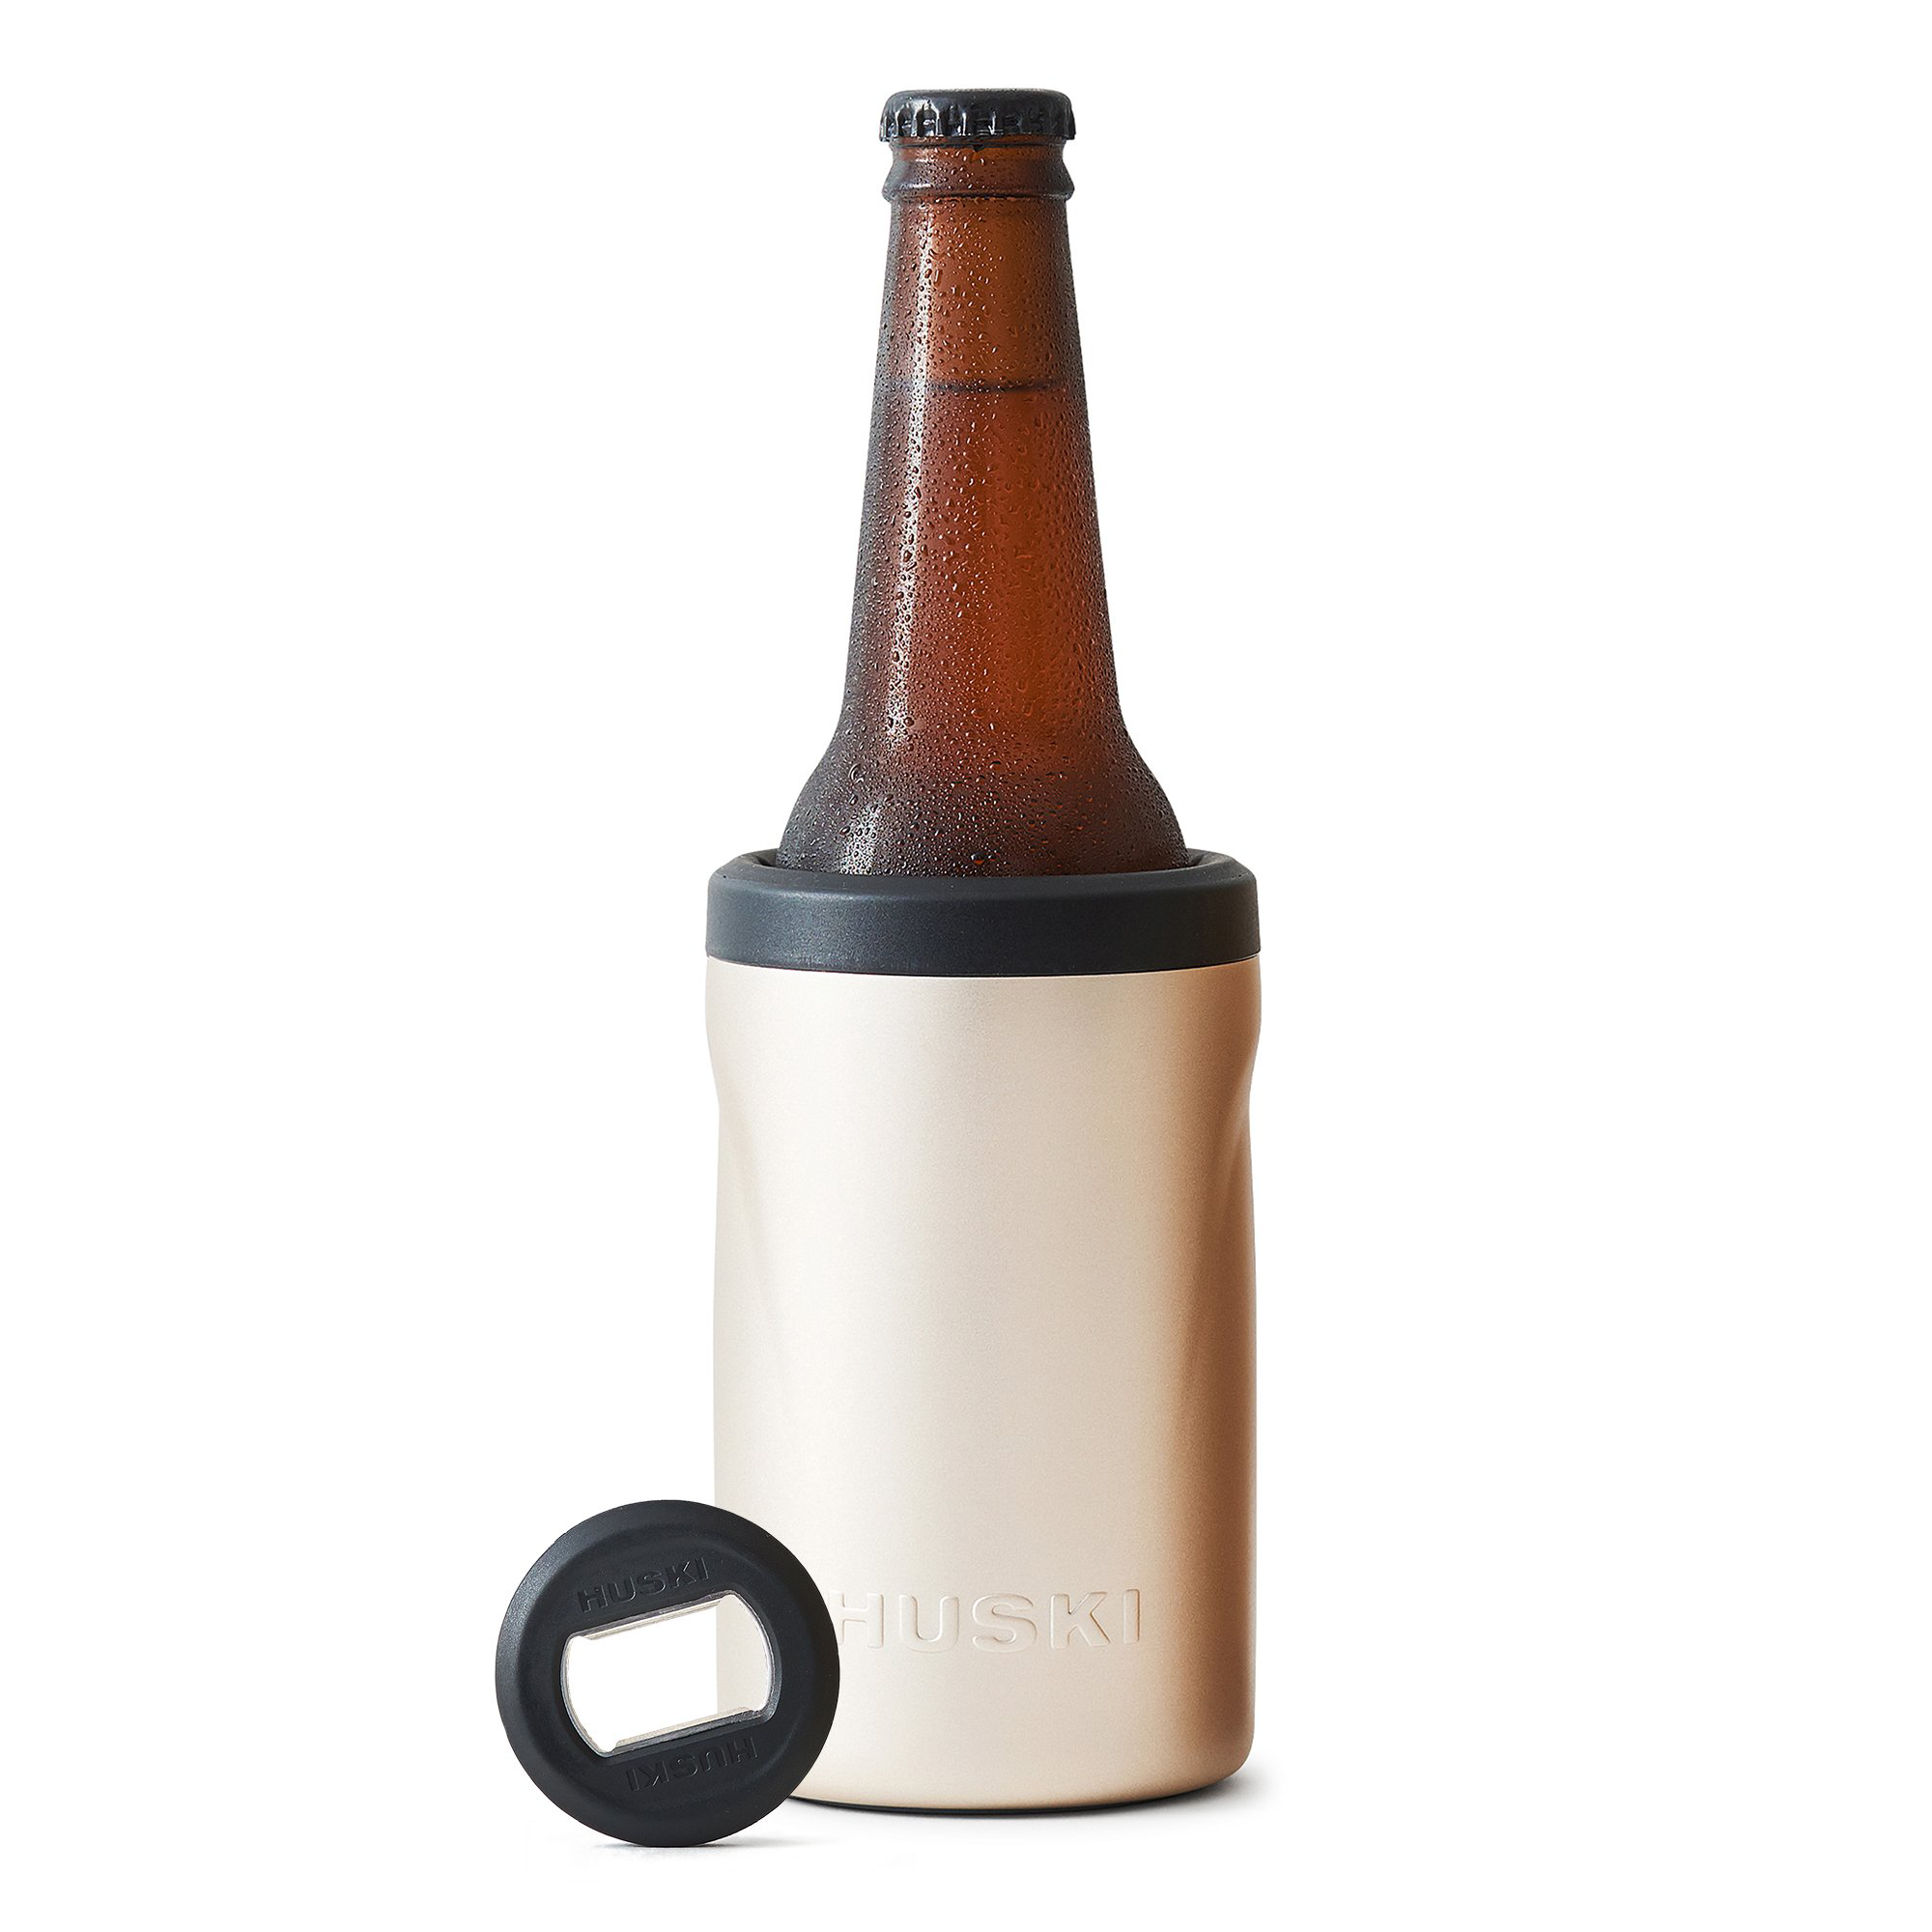 Huski Beer Cooler 2.0 - Good Design